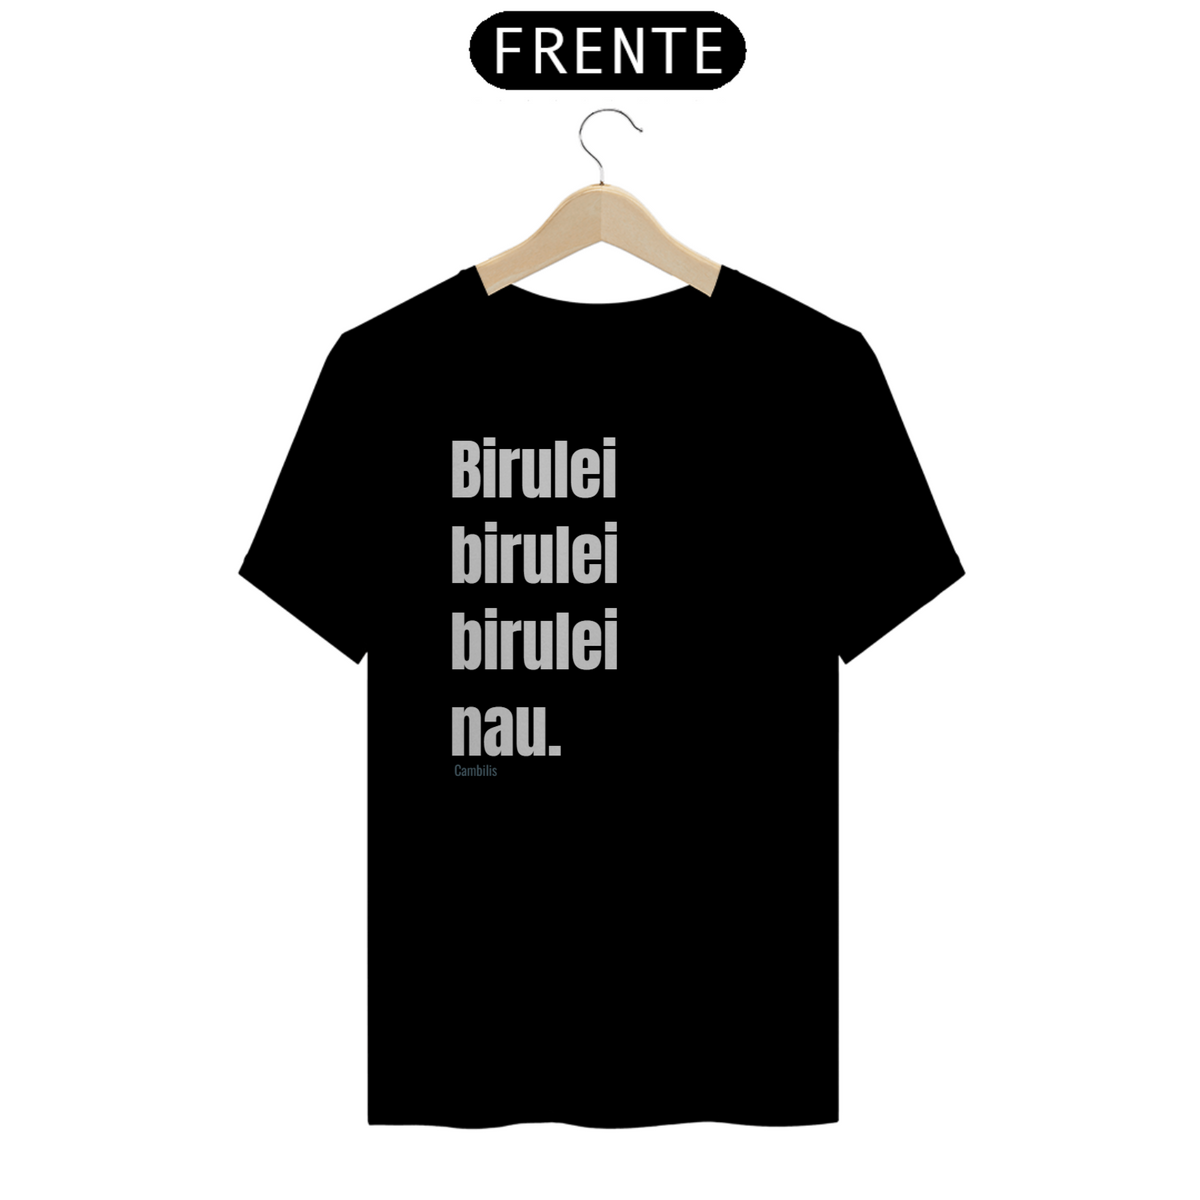 Nome do produto: Camiseta unisex Birulei